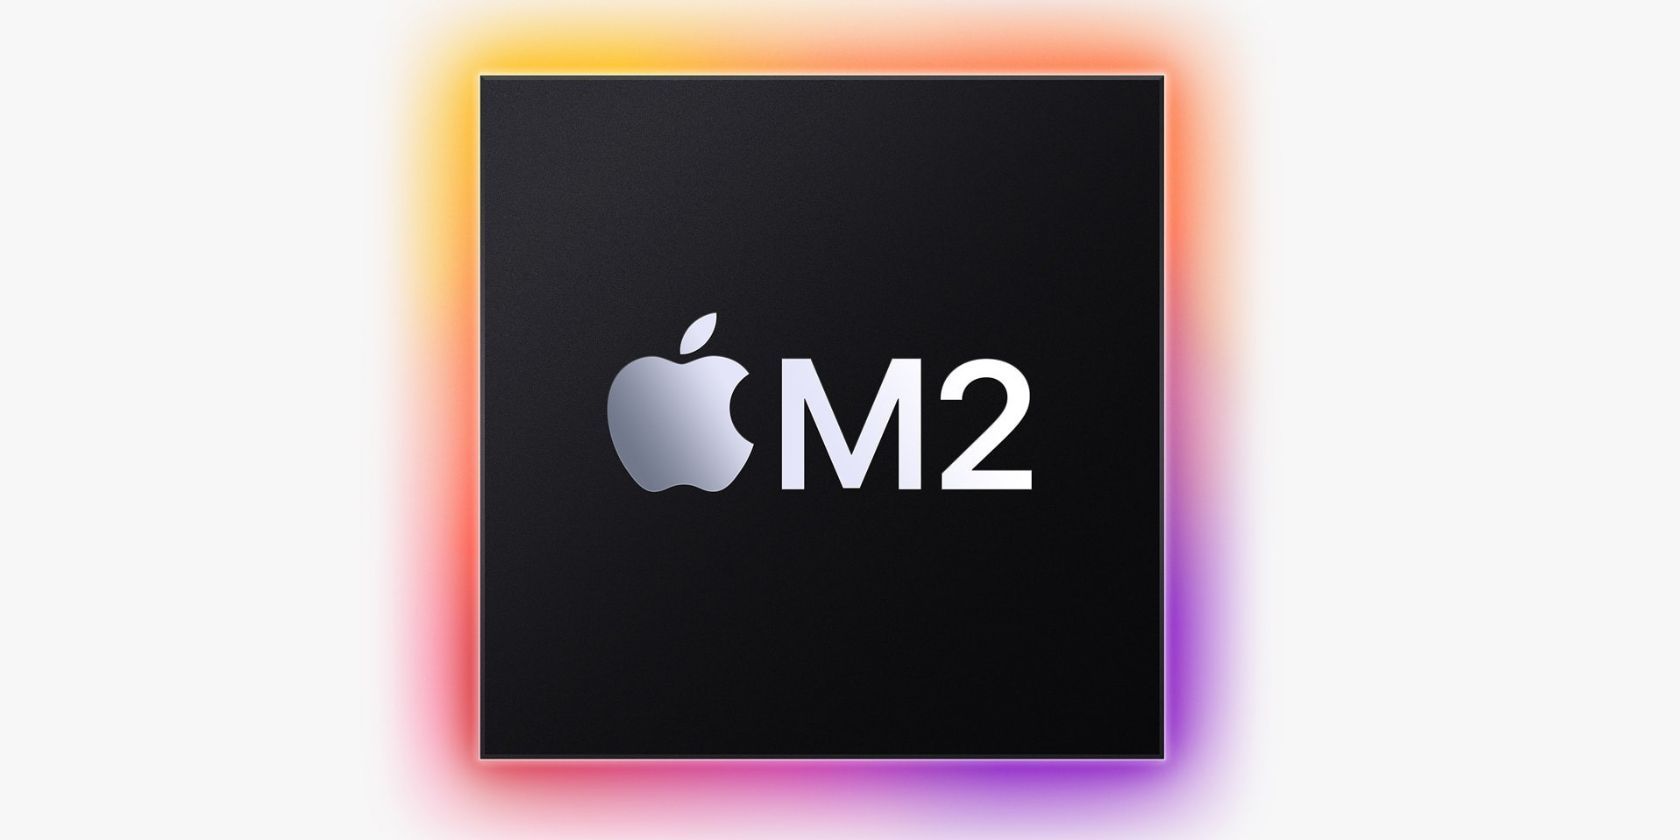 Apple's M2 chip